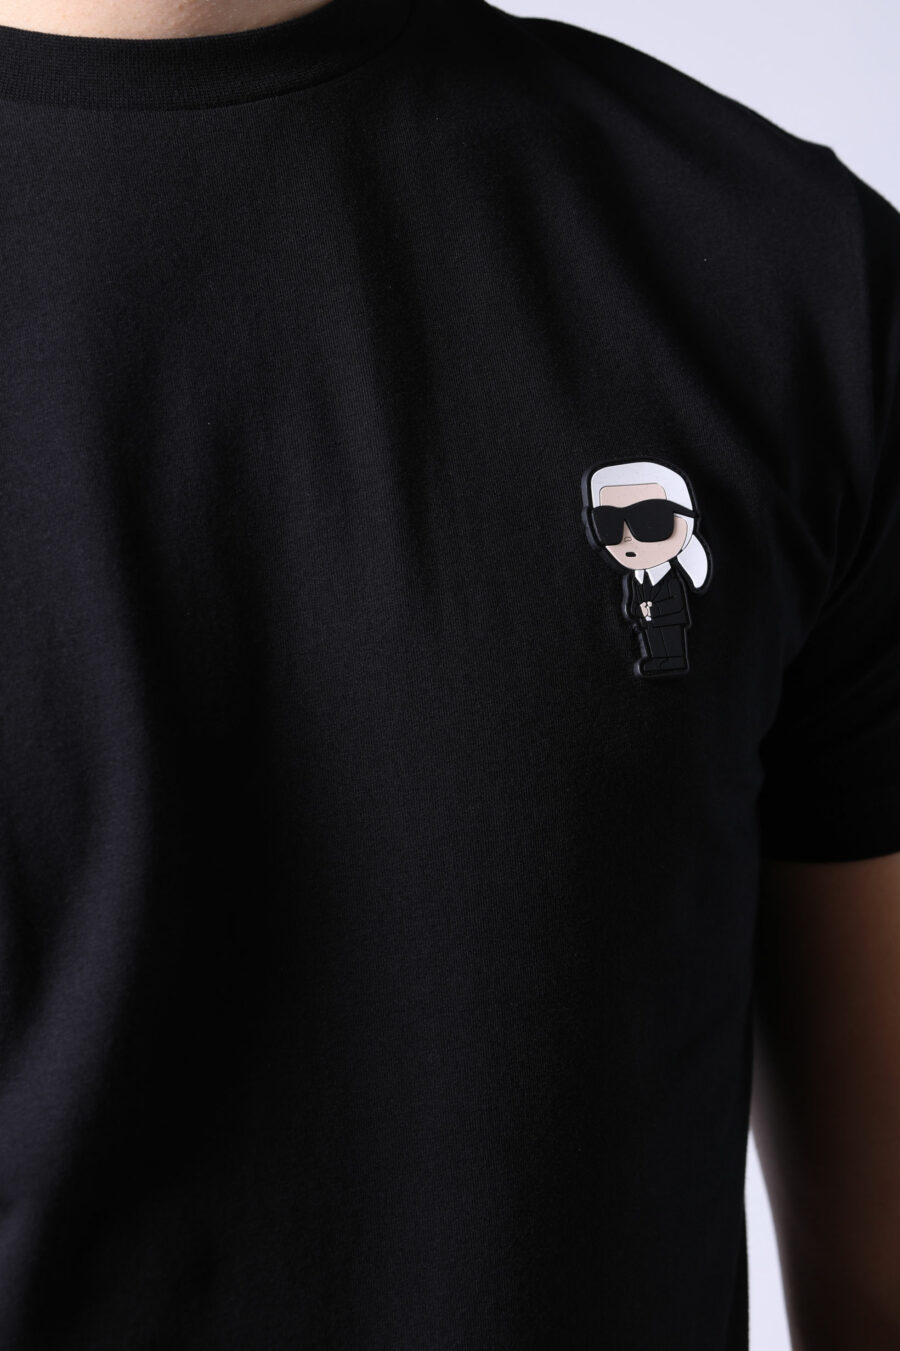 T-shirt preta com o logótipo "ikonik" - Catálogo sem título 05721